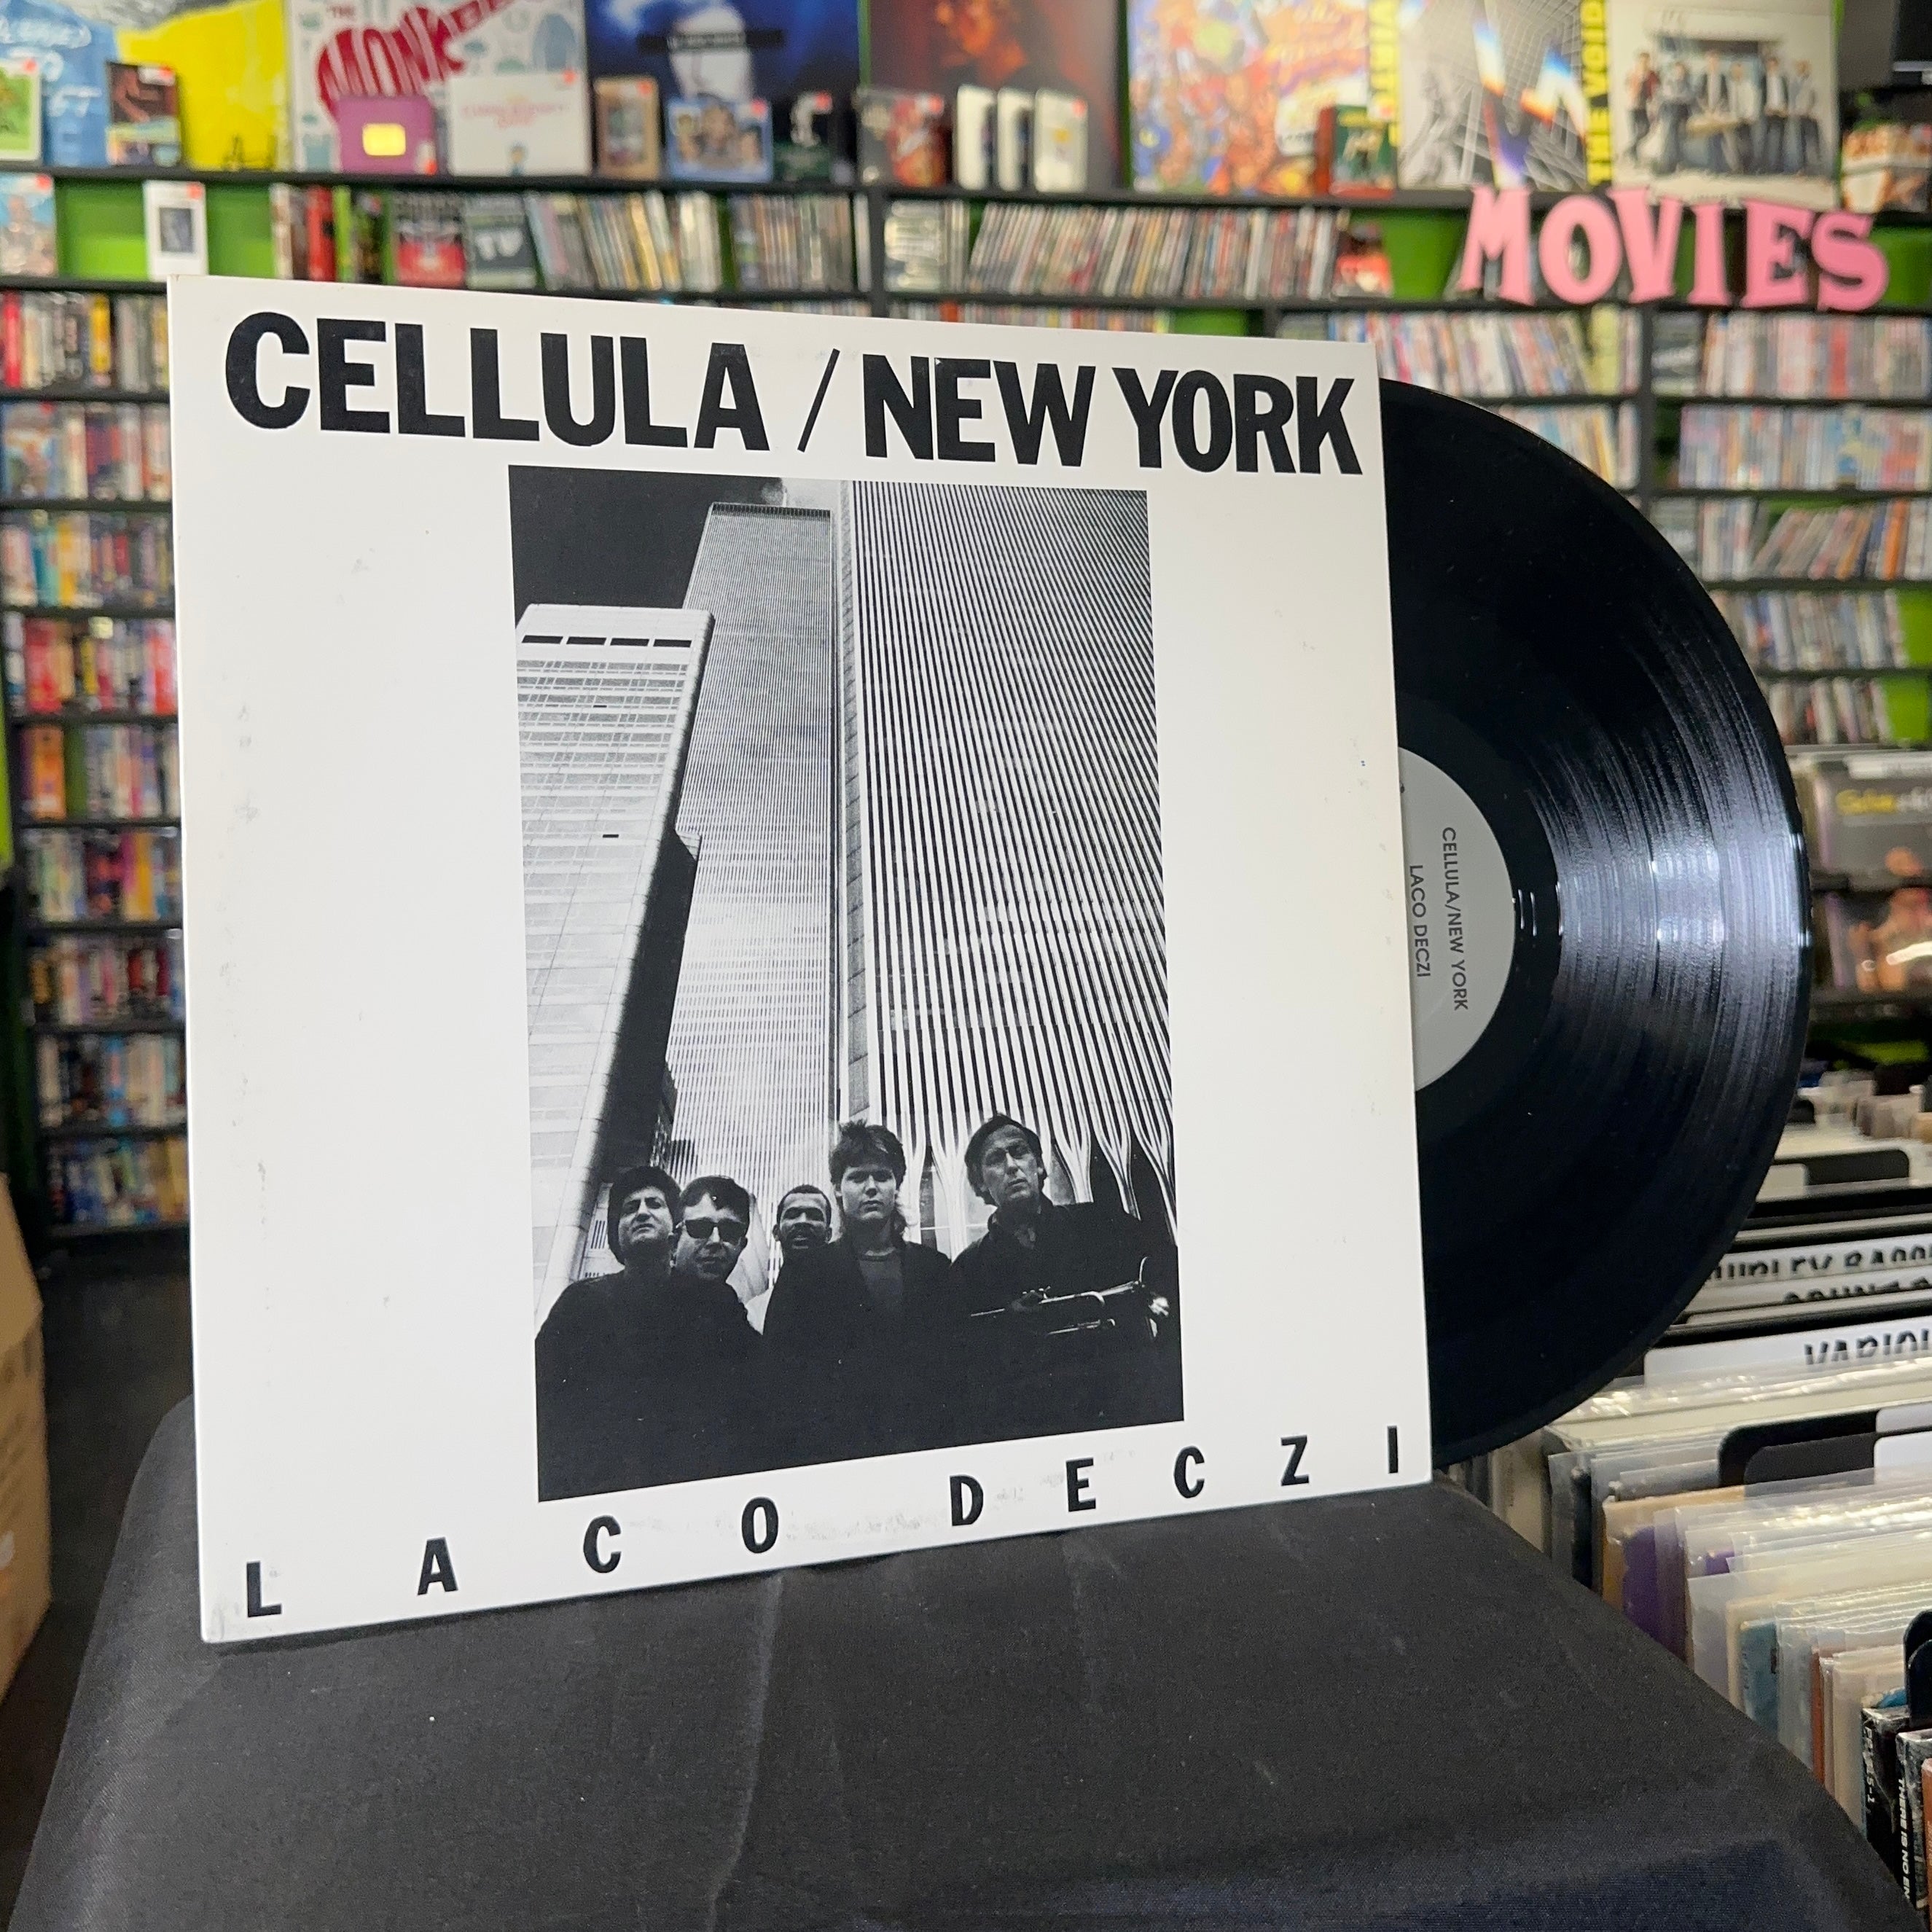 Cellula / New York, Laco Deczi- Cellula / New York - Darkside Records